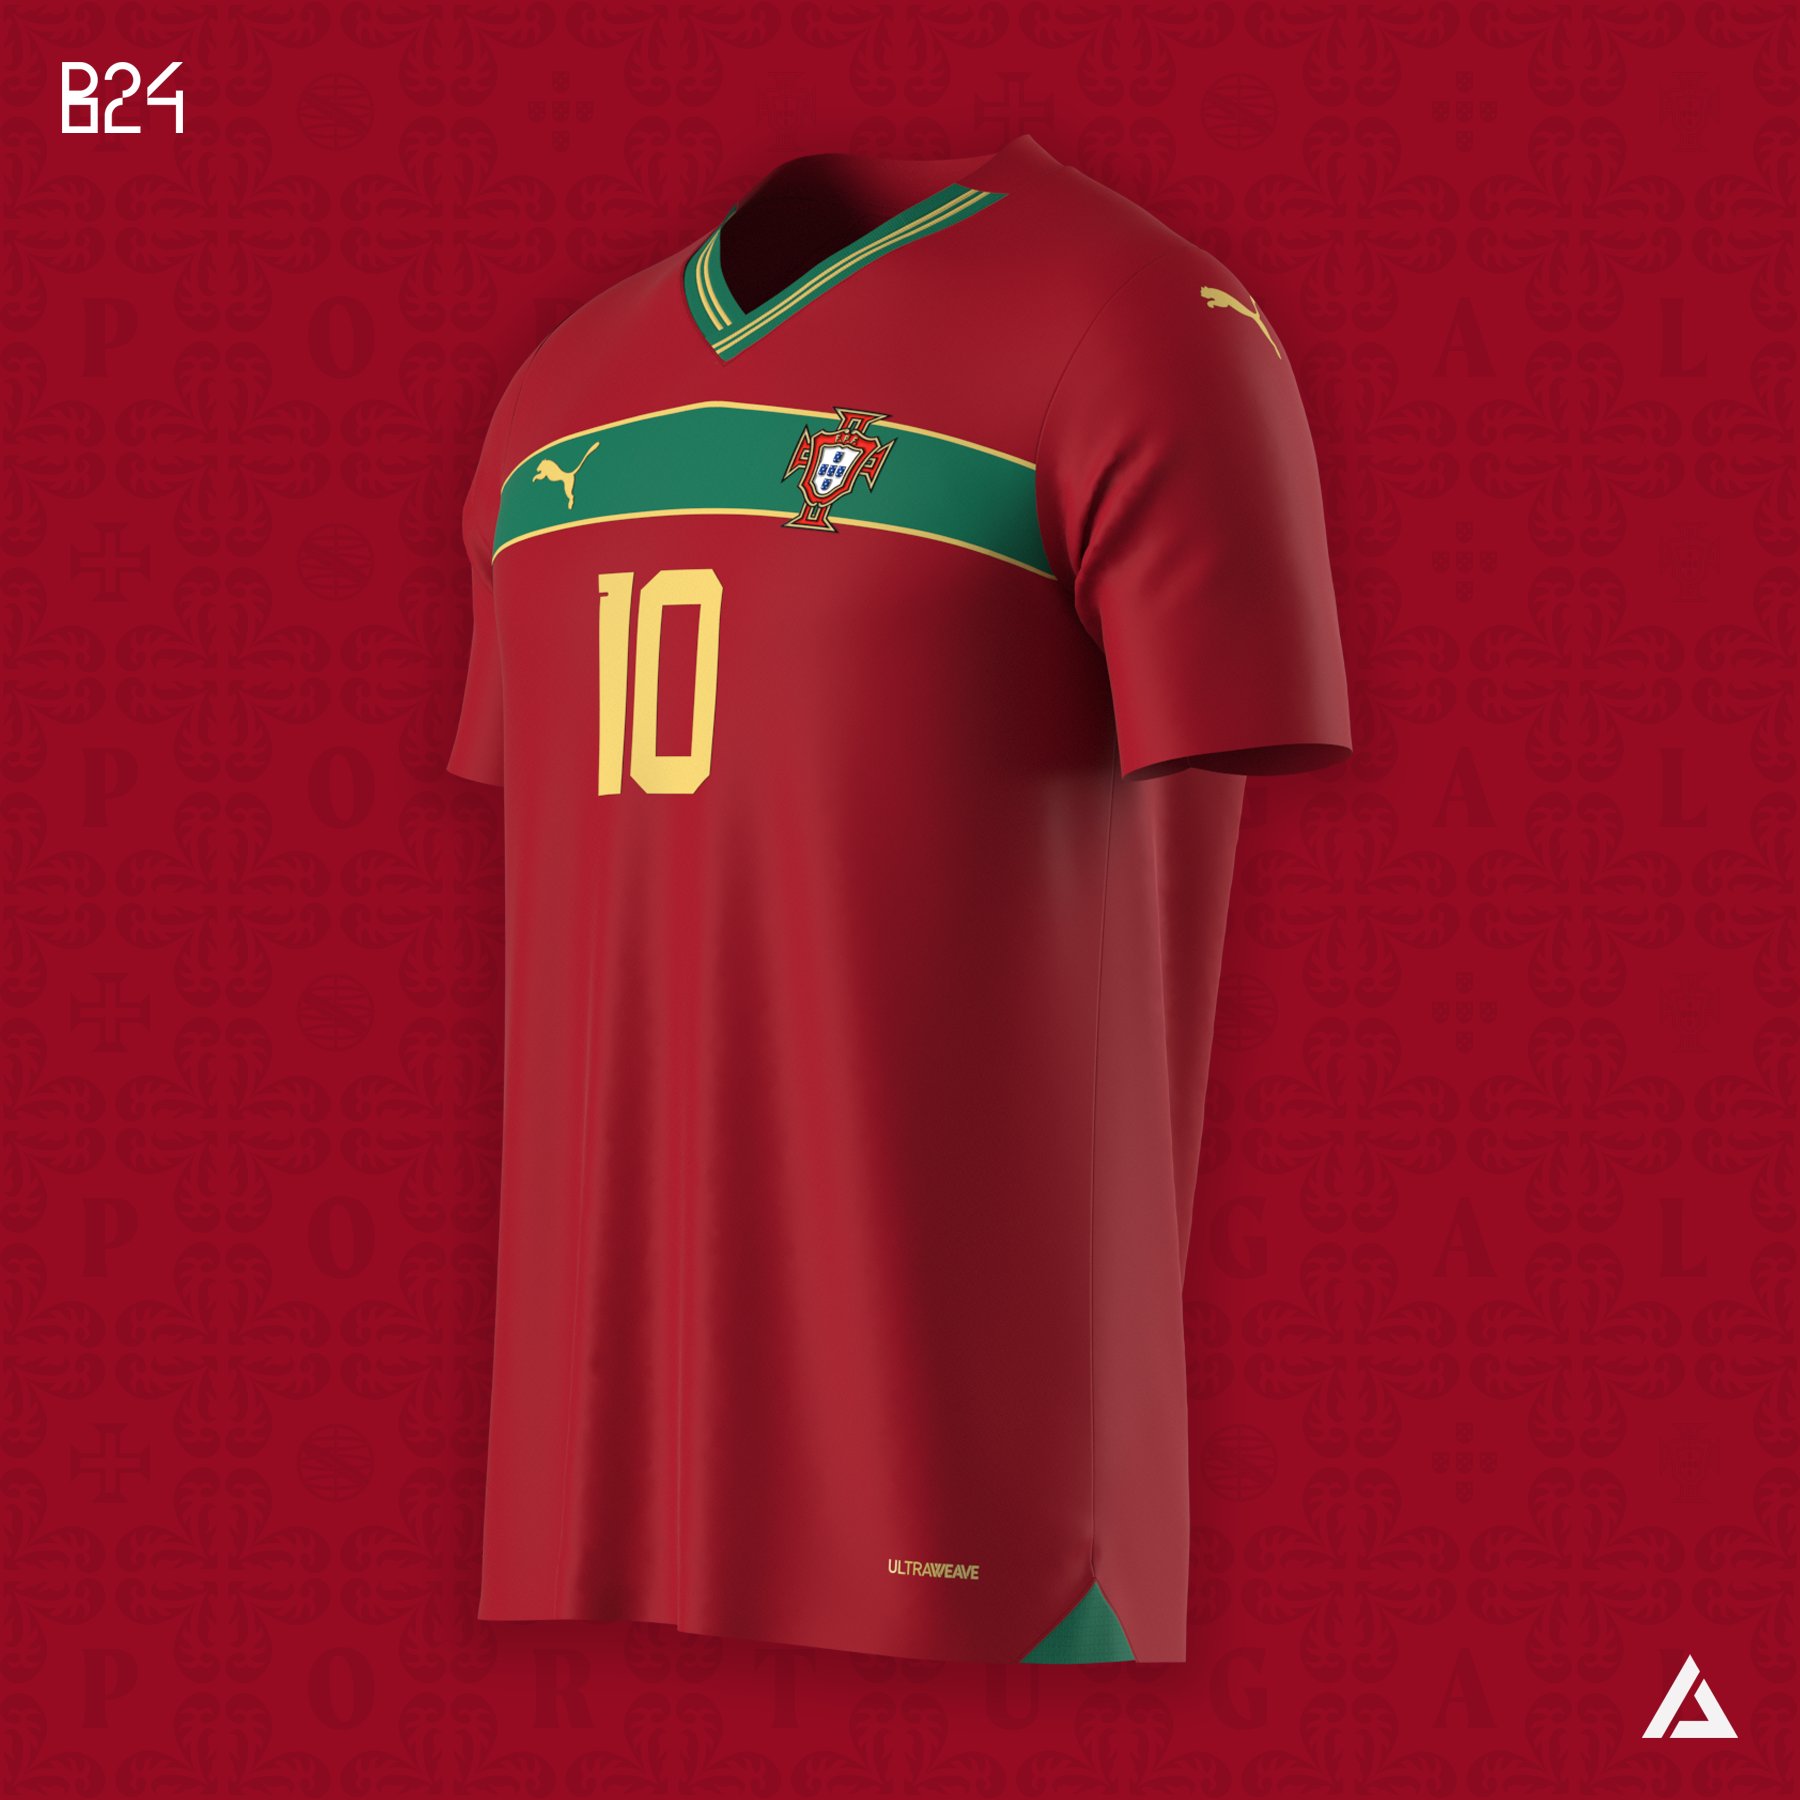 B24 on X: "Portugal x PUMA, a concept by B24 x @jpereira_design 🇵🇹  https://t.co/vPodOAjPAv" / X